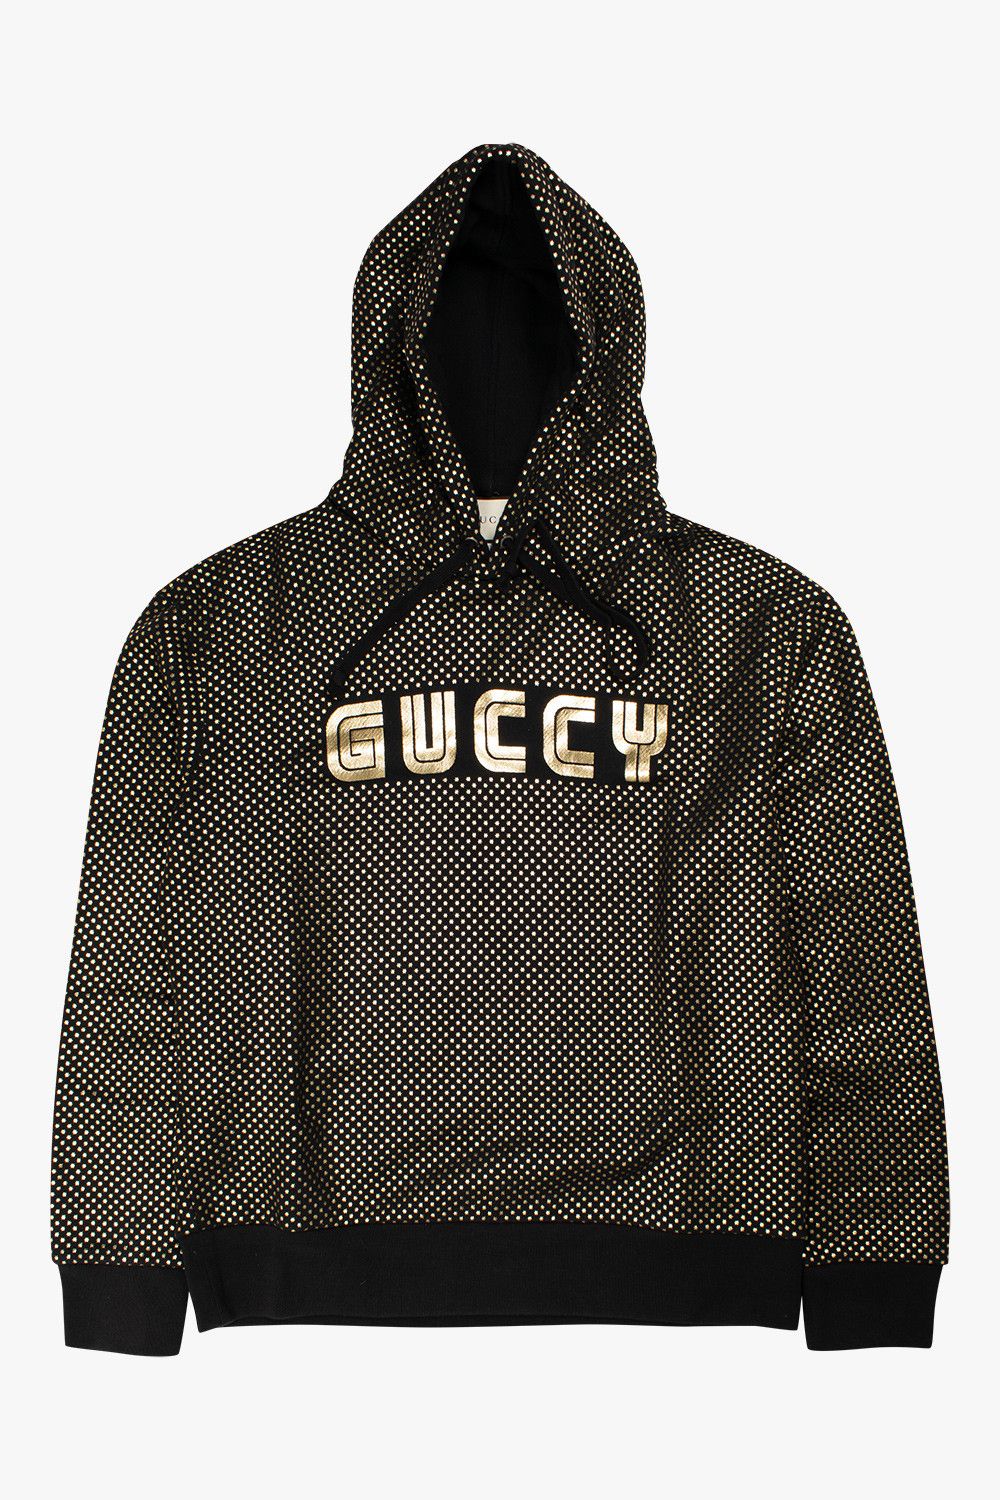 Gucci Guccy Logo Jersey Hoodie, $1,041, farfetch.com